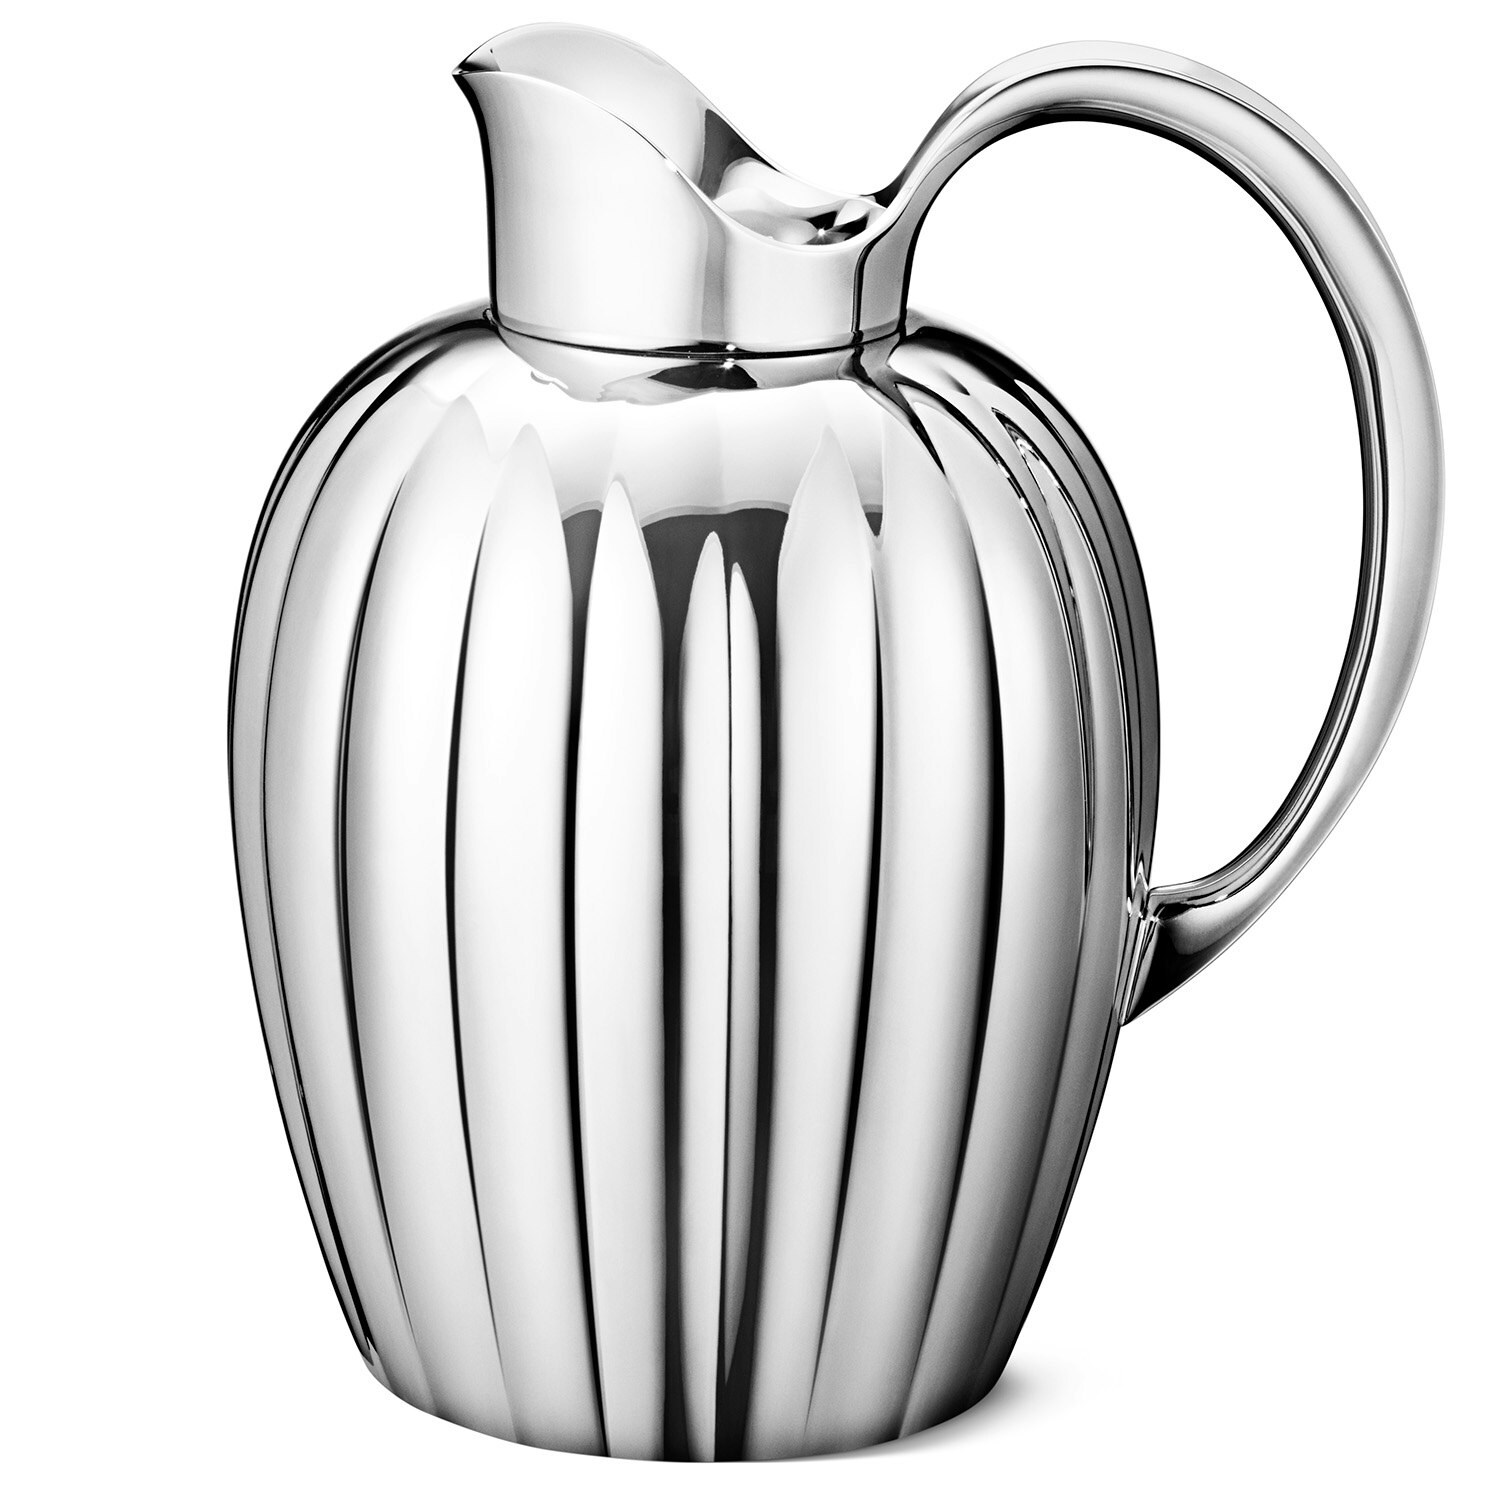 https://royaldesign.com/image/2/georg-jensen-bernadotte-pitcher-stainless-steel-16l-0